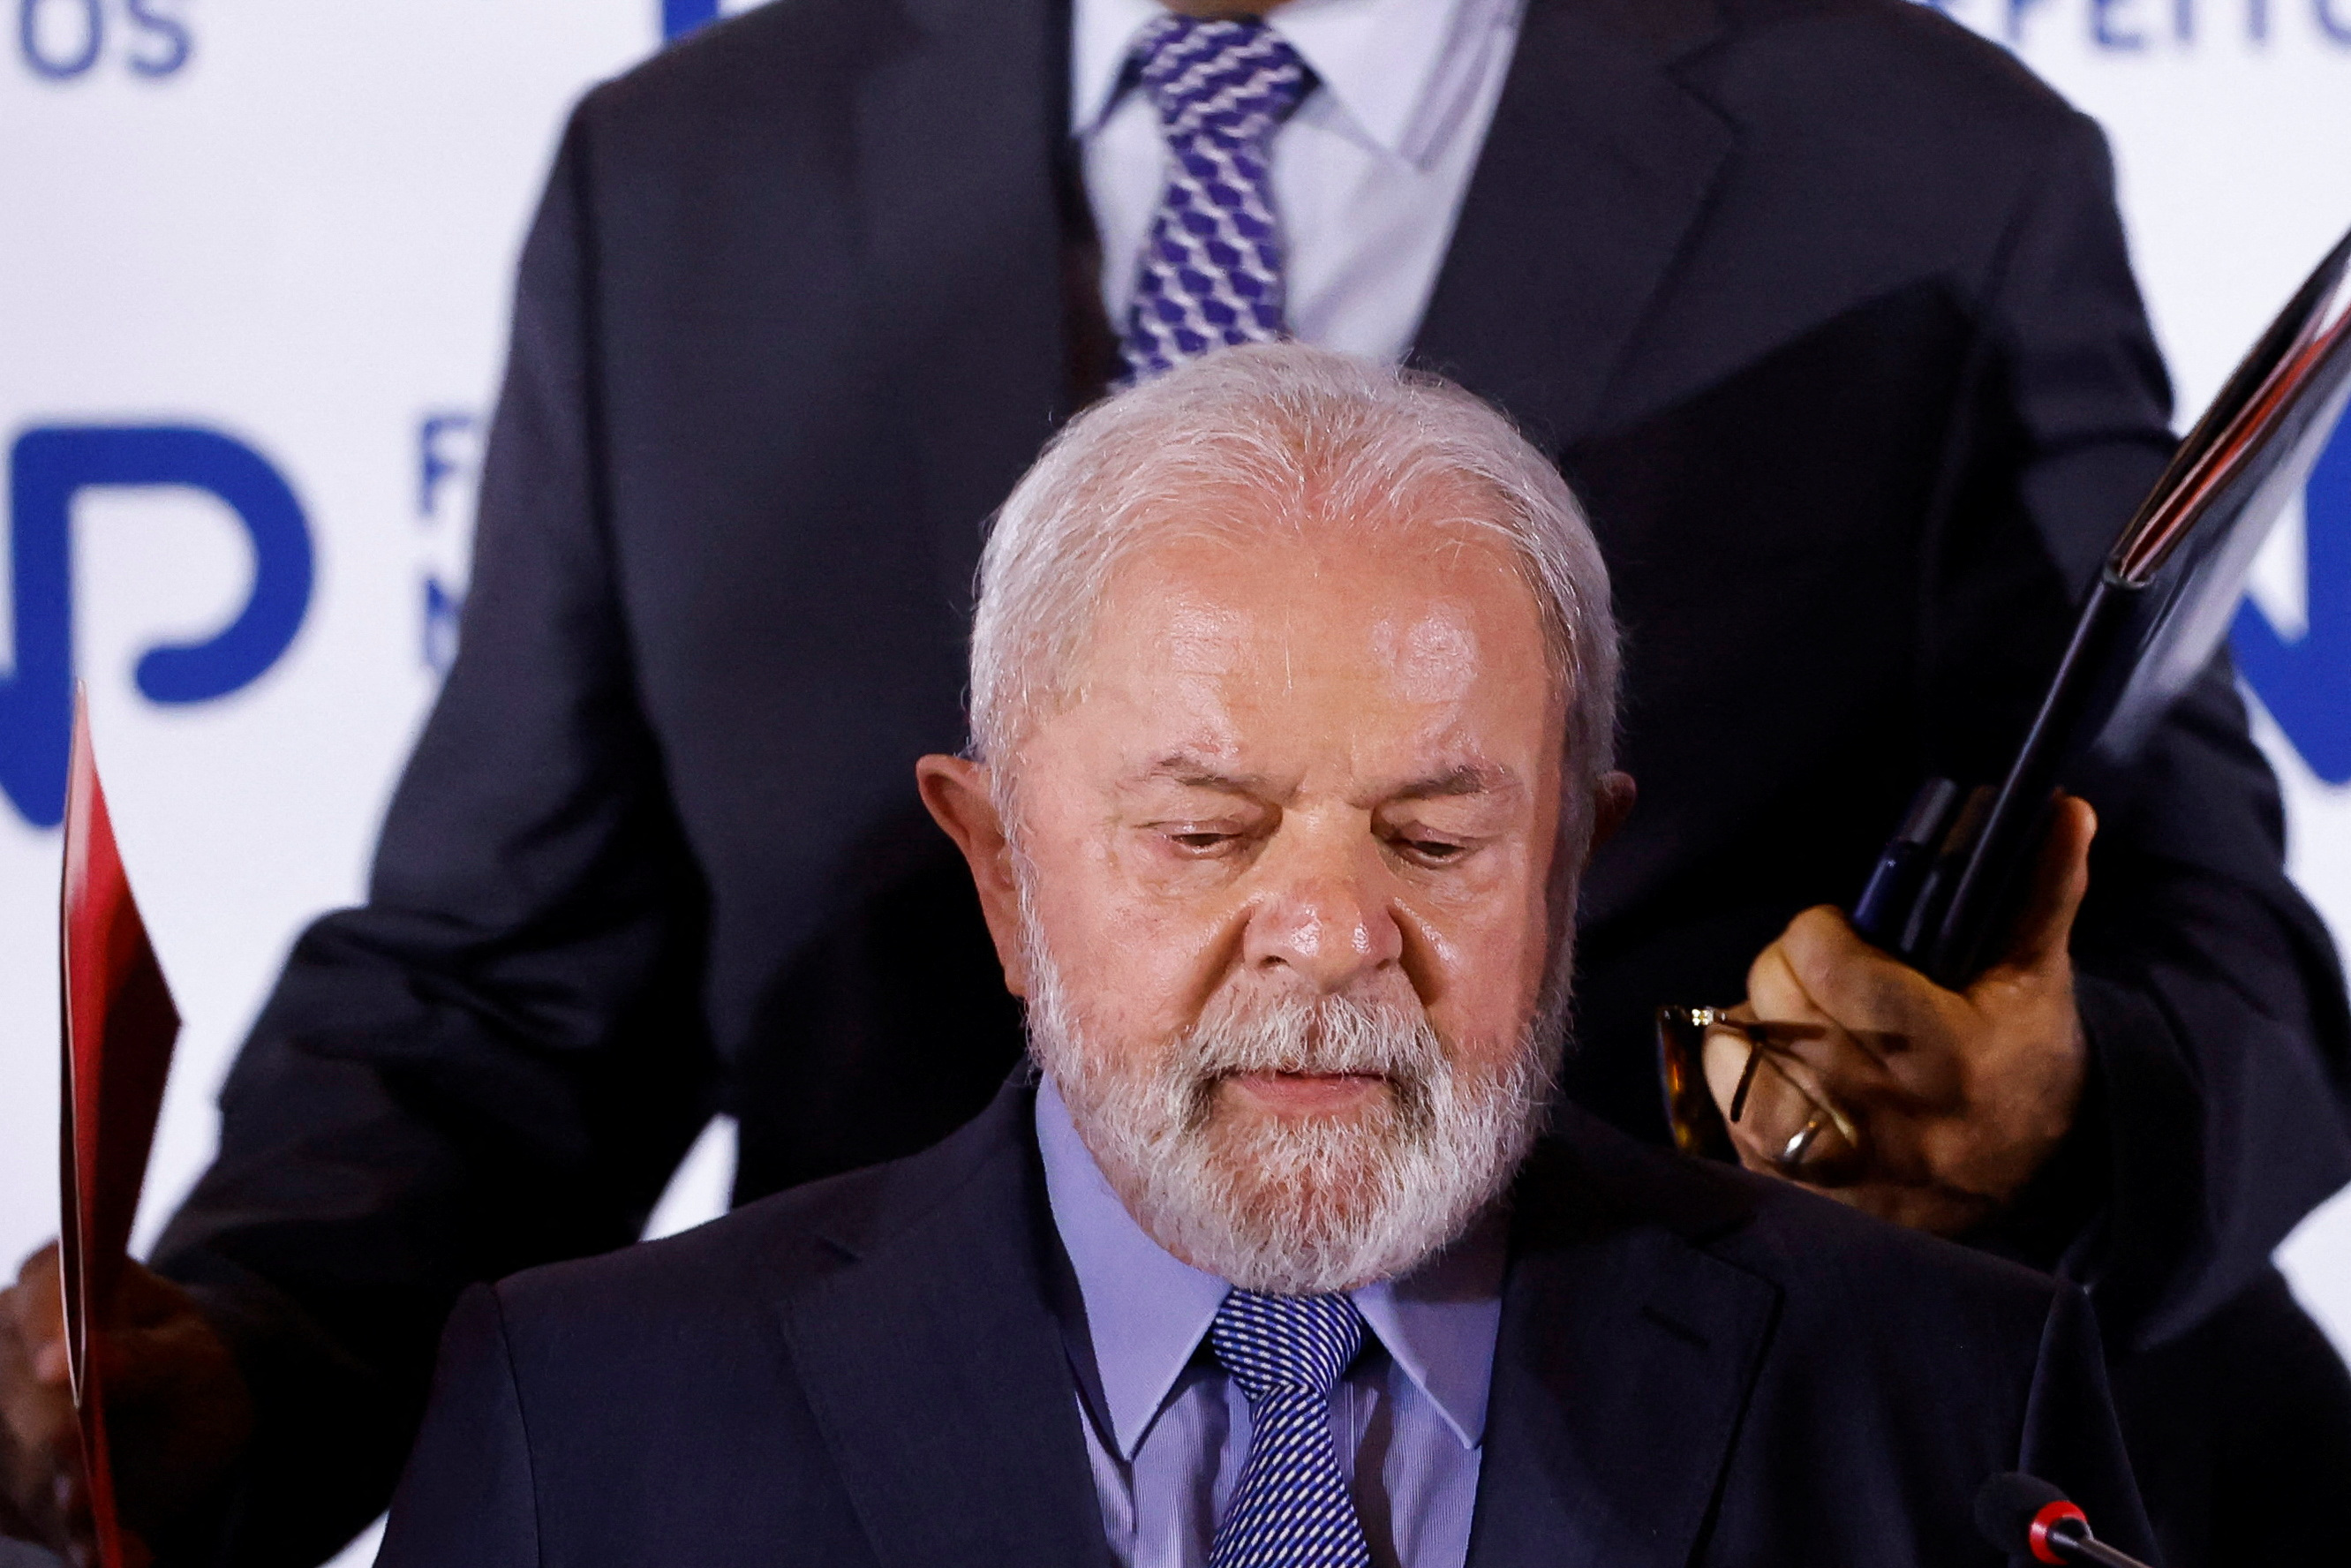 Brazil's President Luiz Inacio Lula da Silva attends a meeting with mayors in Brasilia